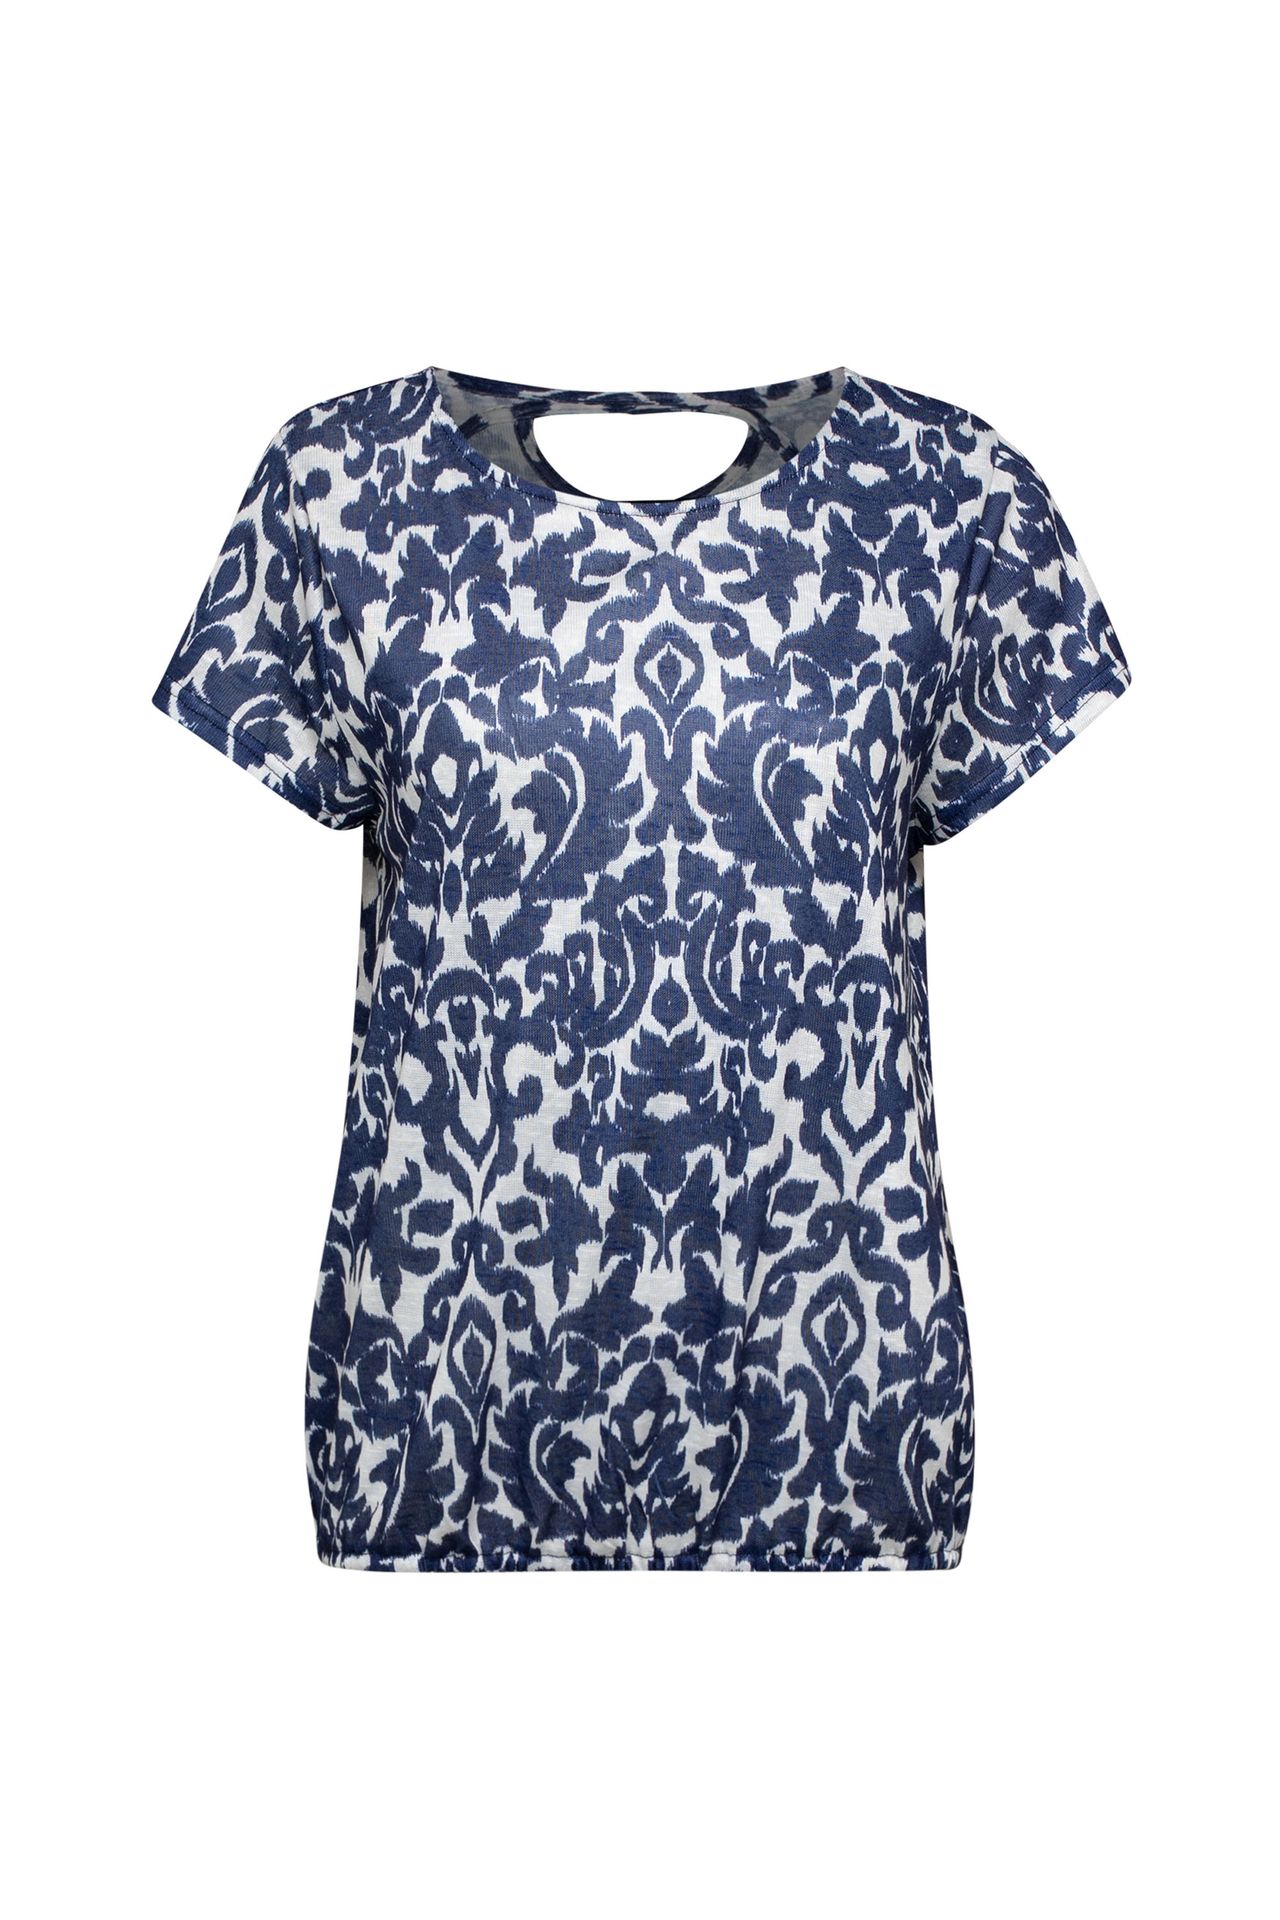 Norah Shirt blauw wit blue/white 212714-431